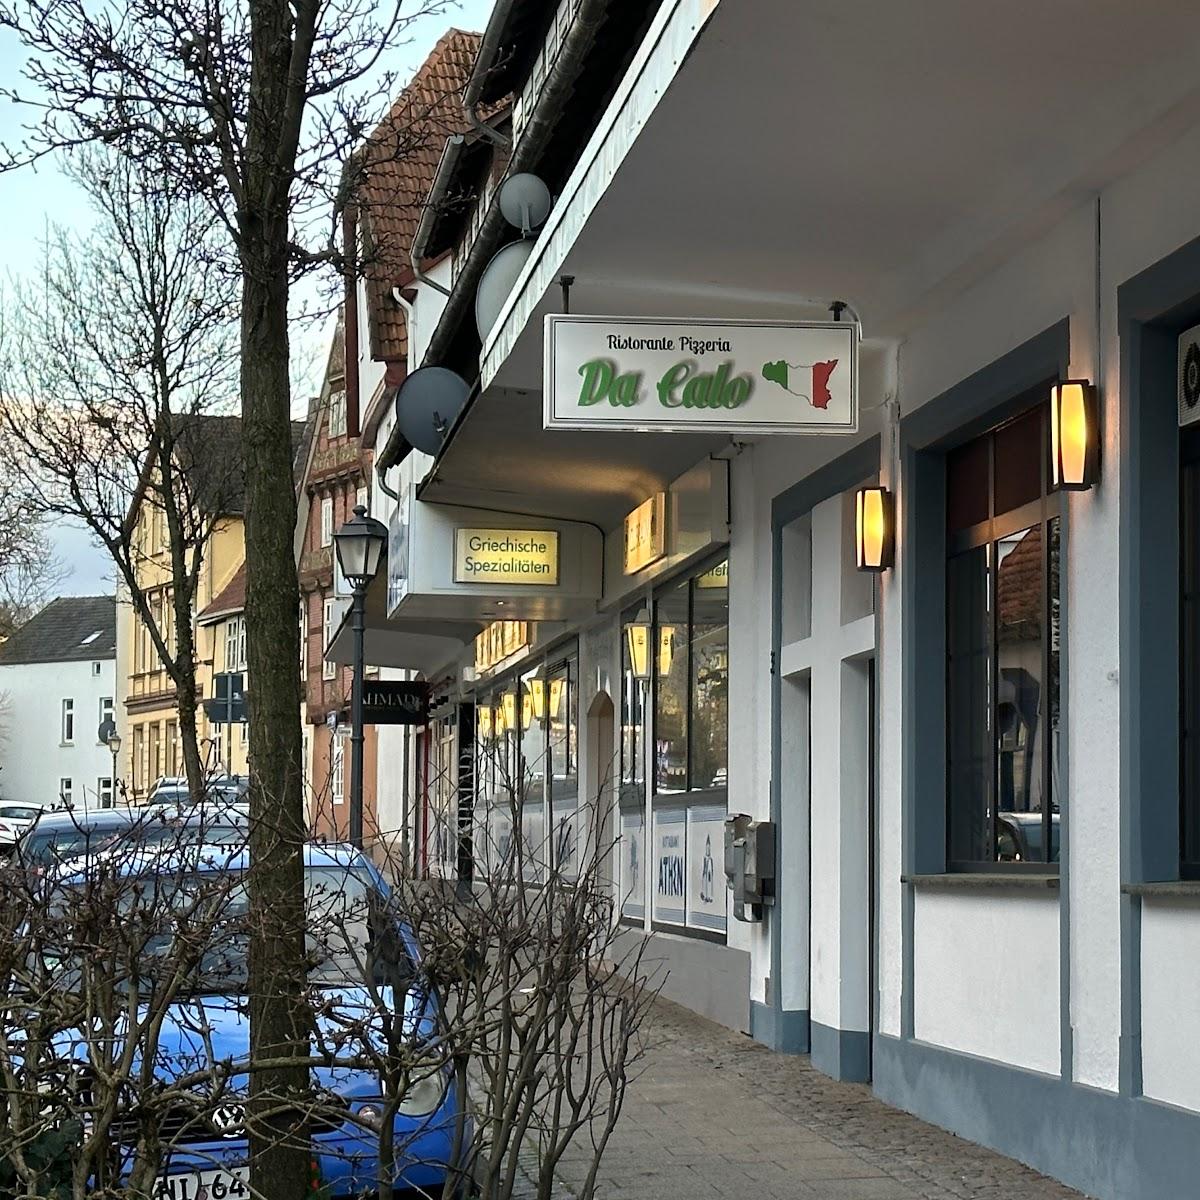 Restaurant "Da Calo" in Bückeburg